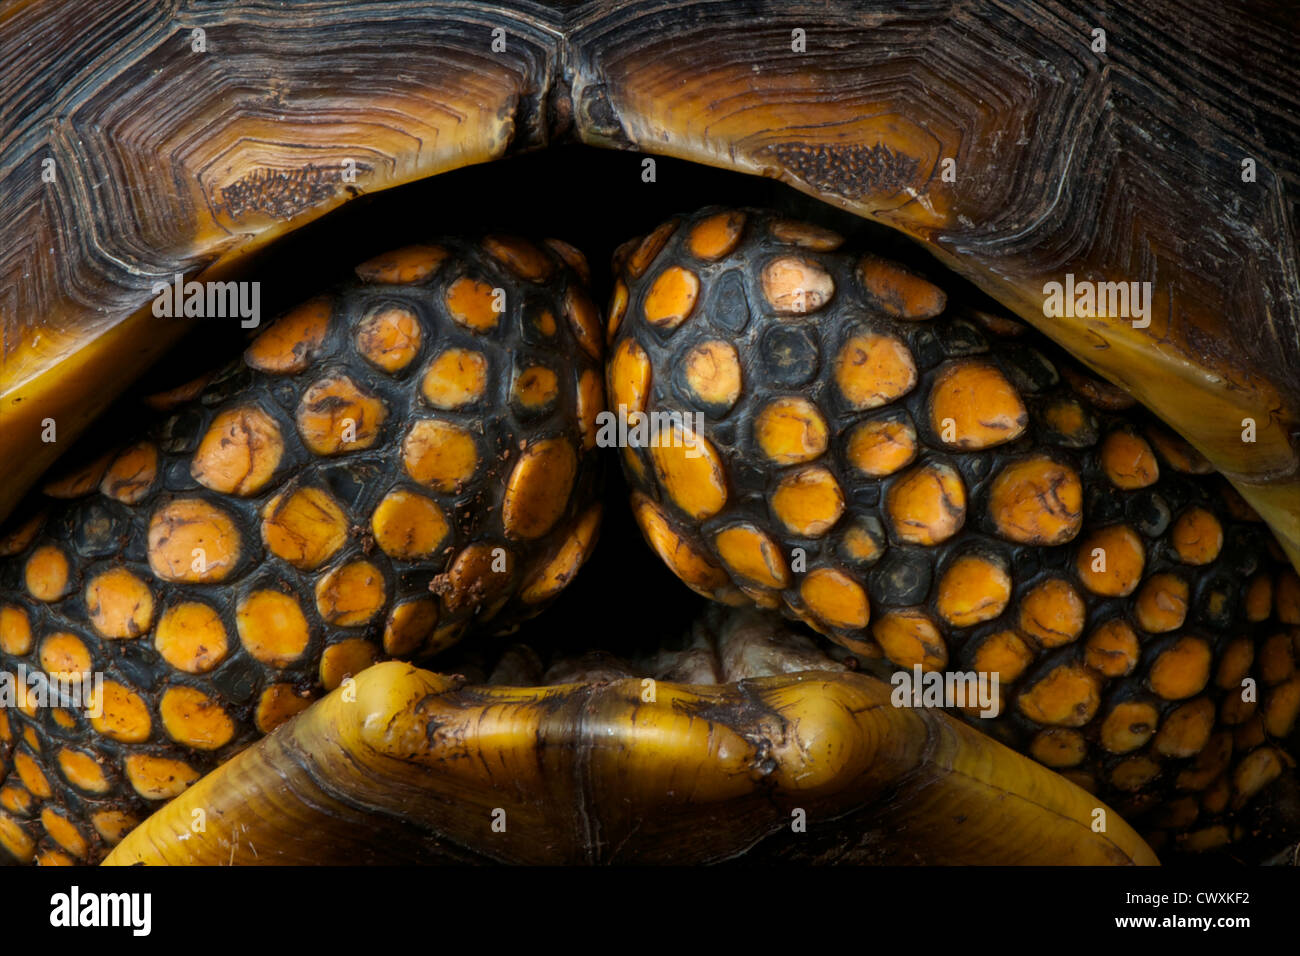 Giant tortoise / Chelonoidis denticulata, Stock Photo